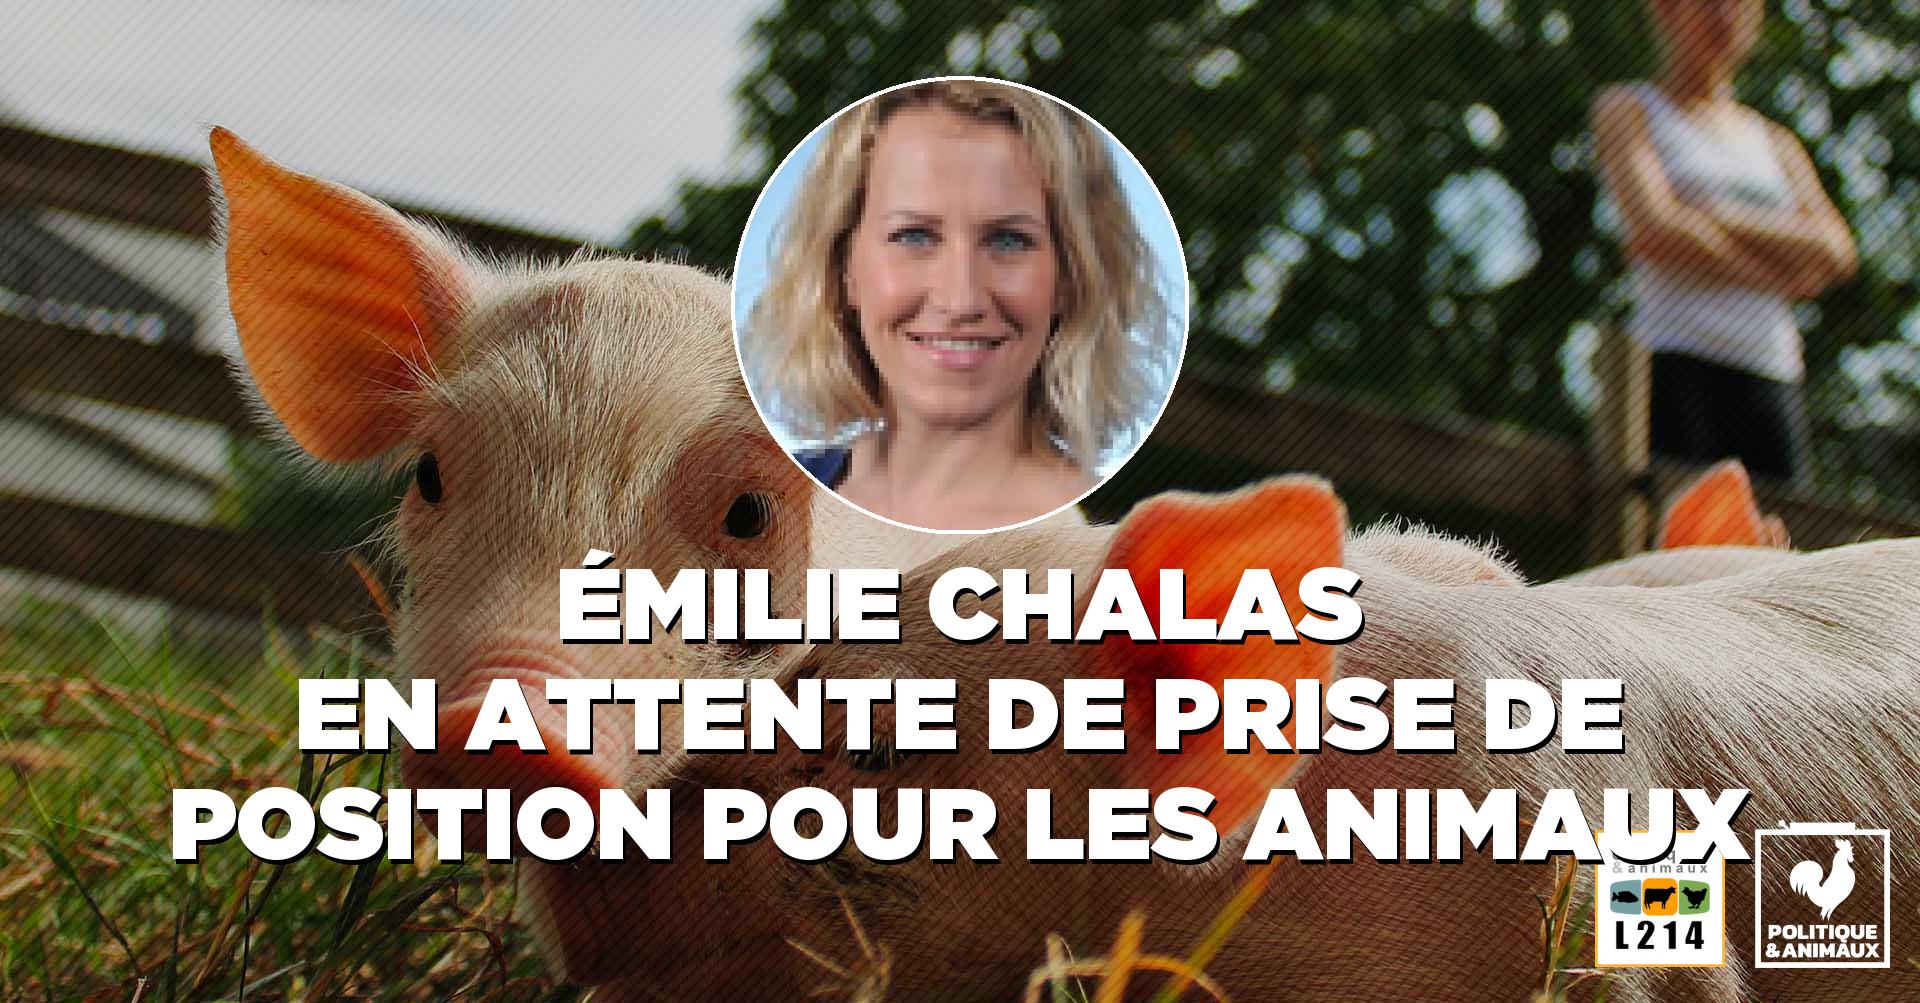 https://www.politique-animaux.fr/sites/www.politique-animaux.fr/fichiers/image-partage/politicien/emilie-chalas/emilie-chalas--animaux-droit-animal-10191.jpg